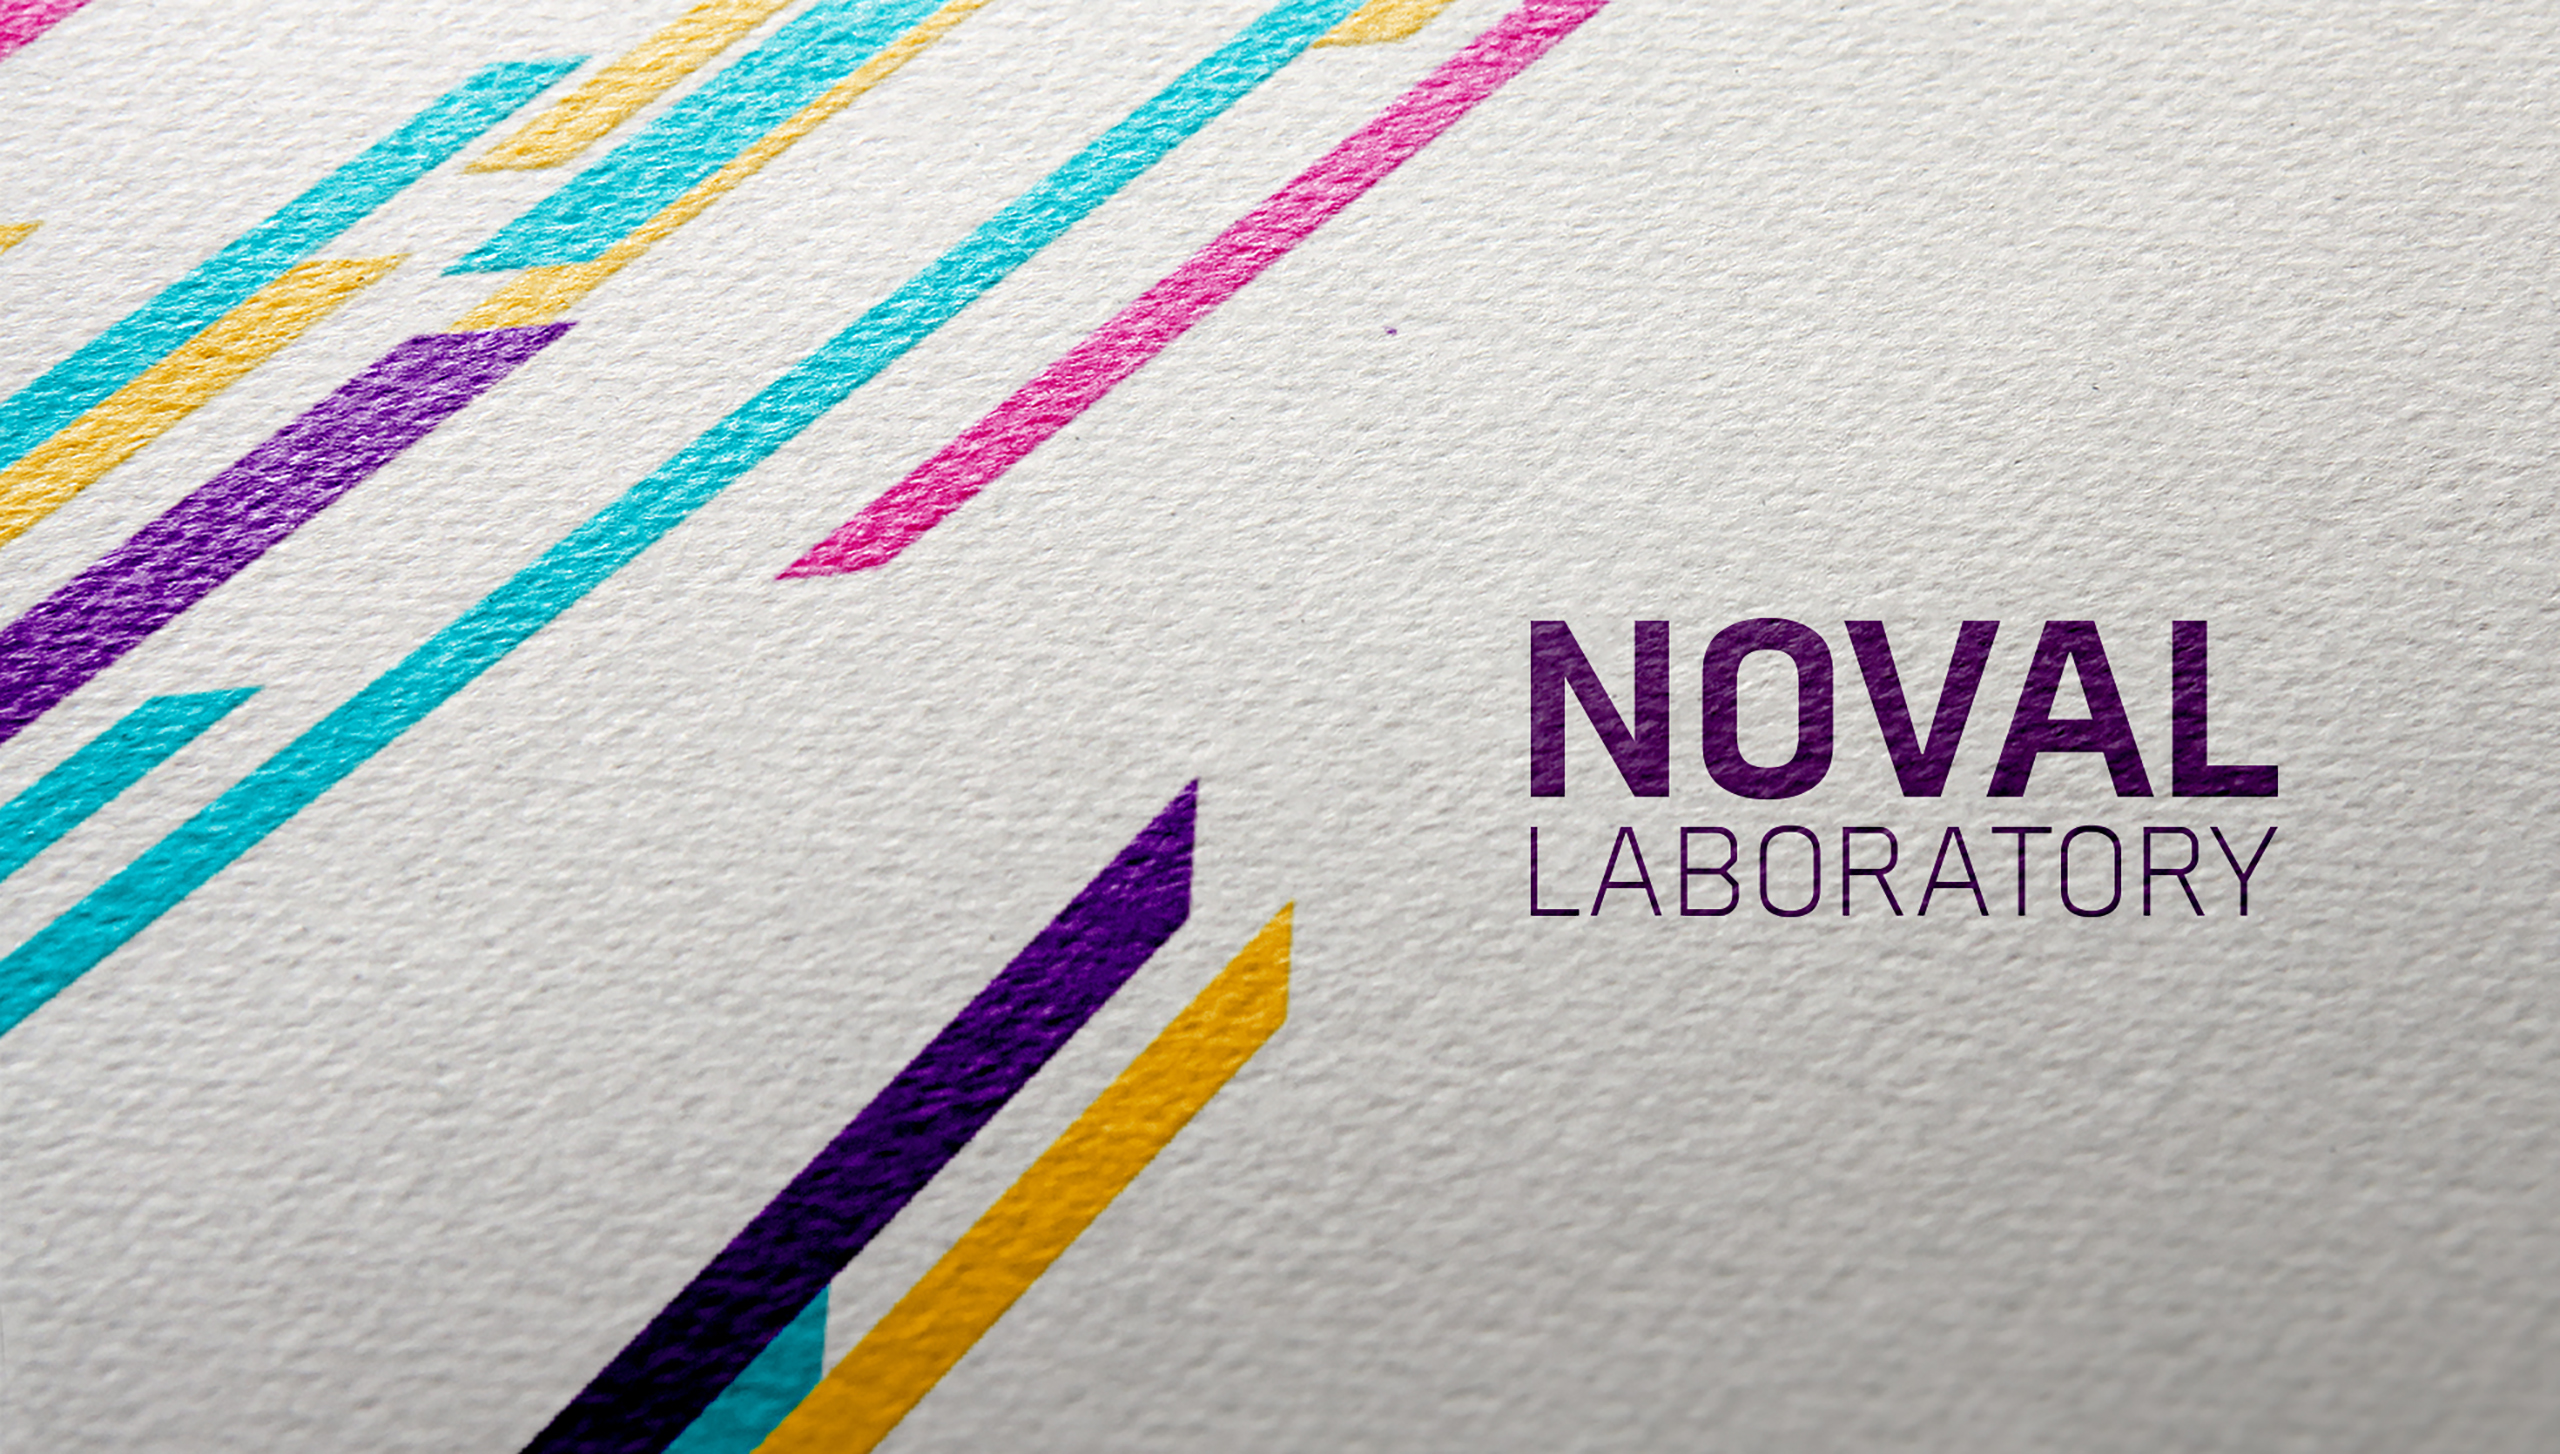 Noval Laboratory Article, Vatra Agency / Founder & CEO Gerton Bejo